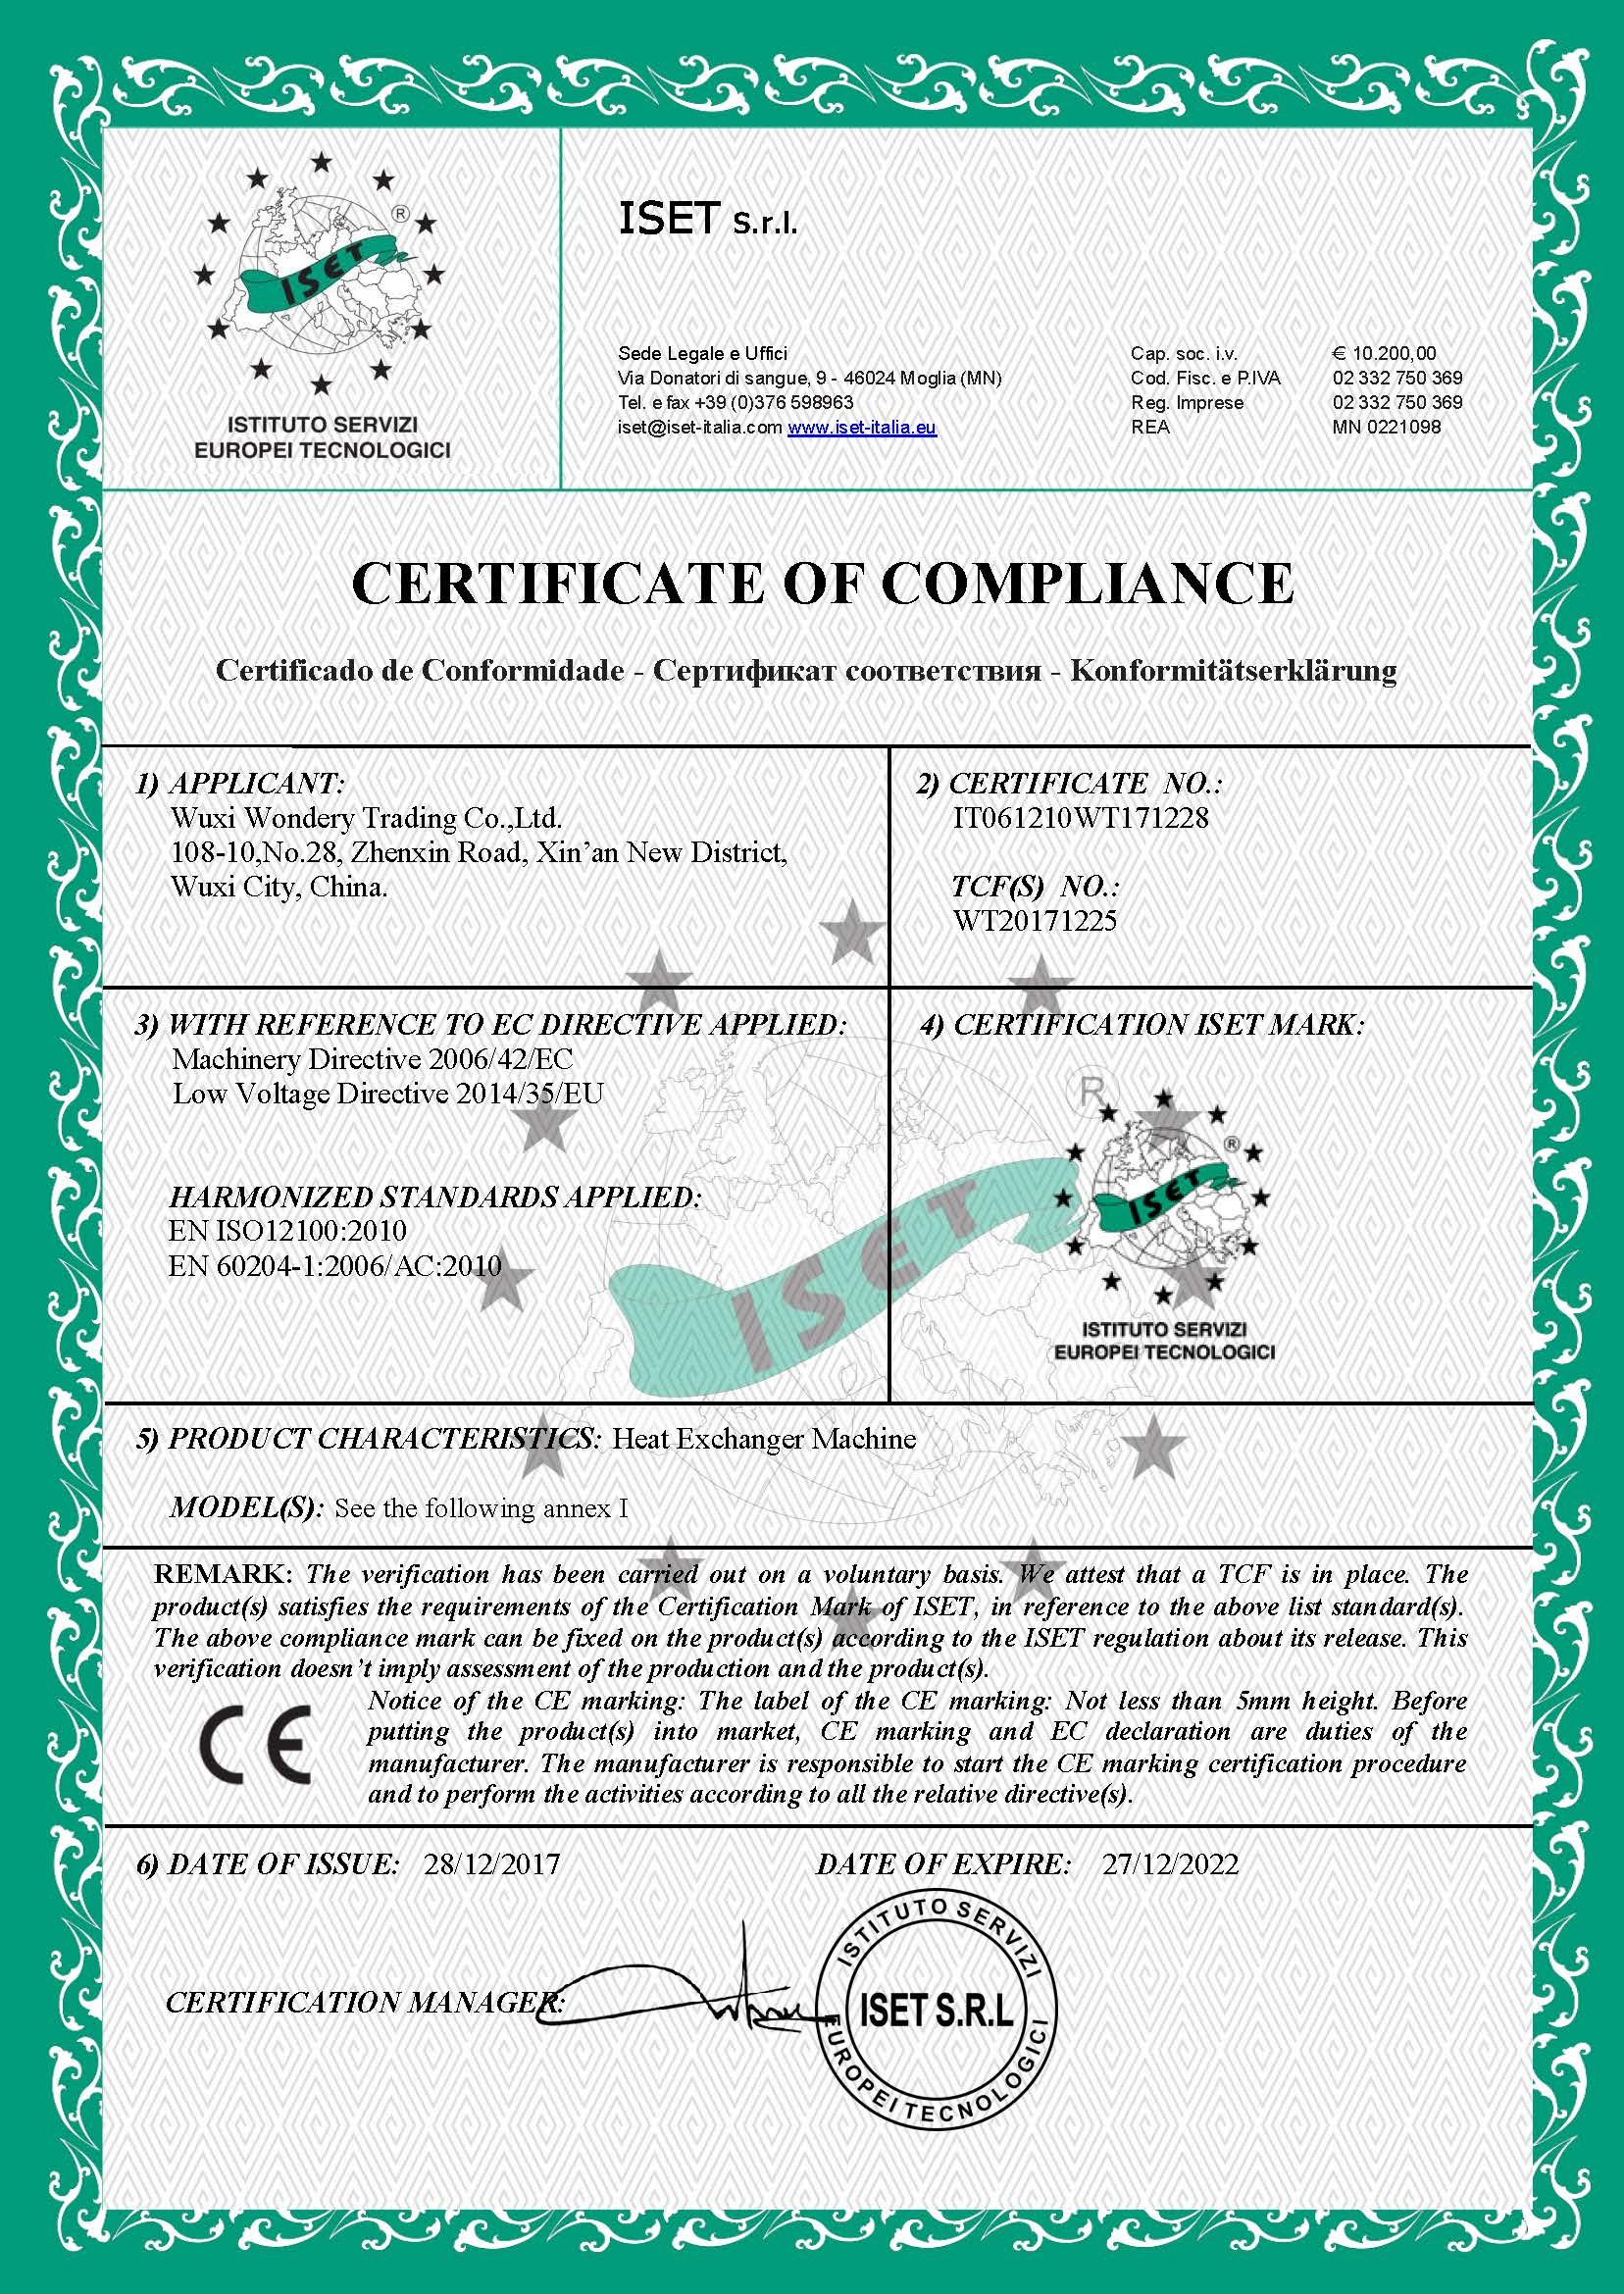 China Wondery Trading Co., Ltd Certificaten